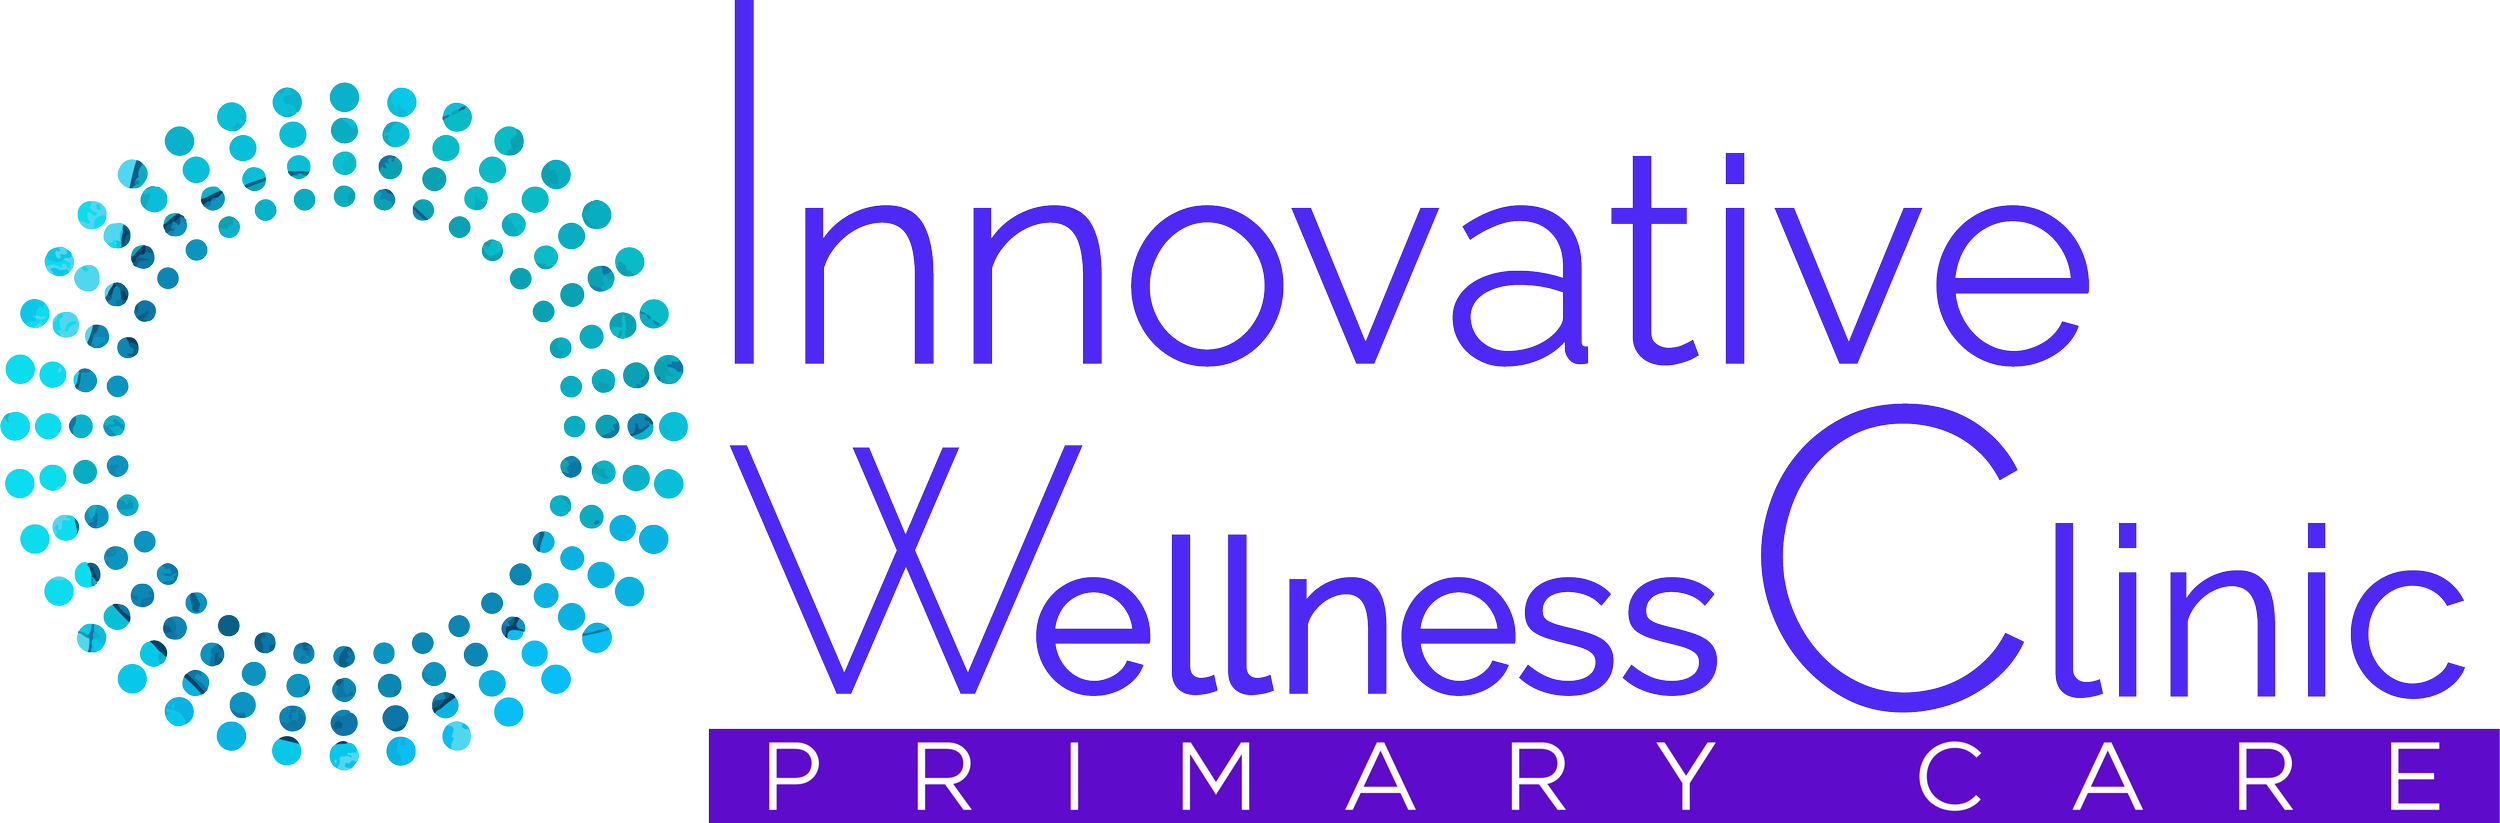 Innovative Wellness Clinic Logo.png